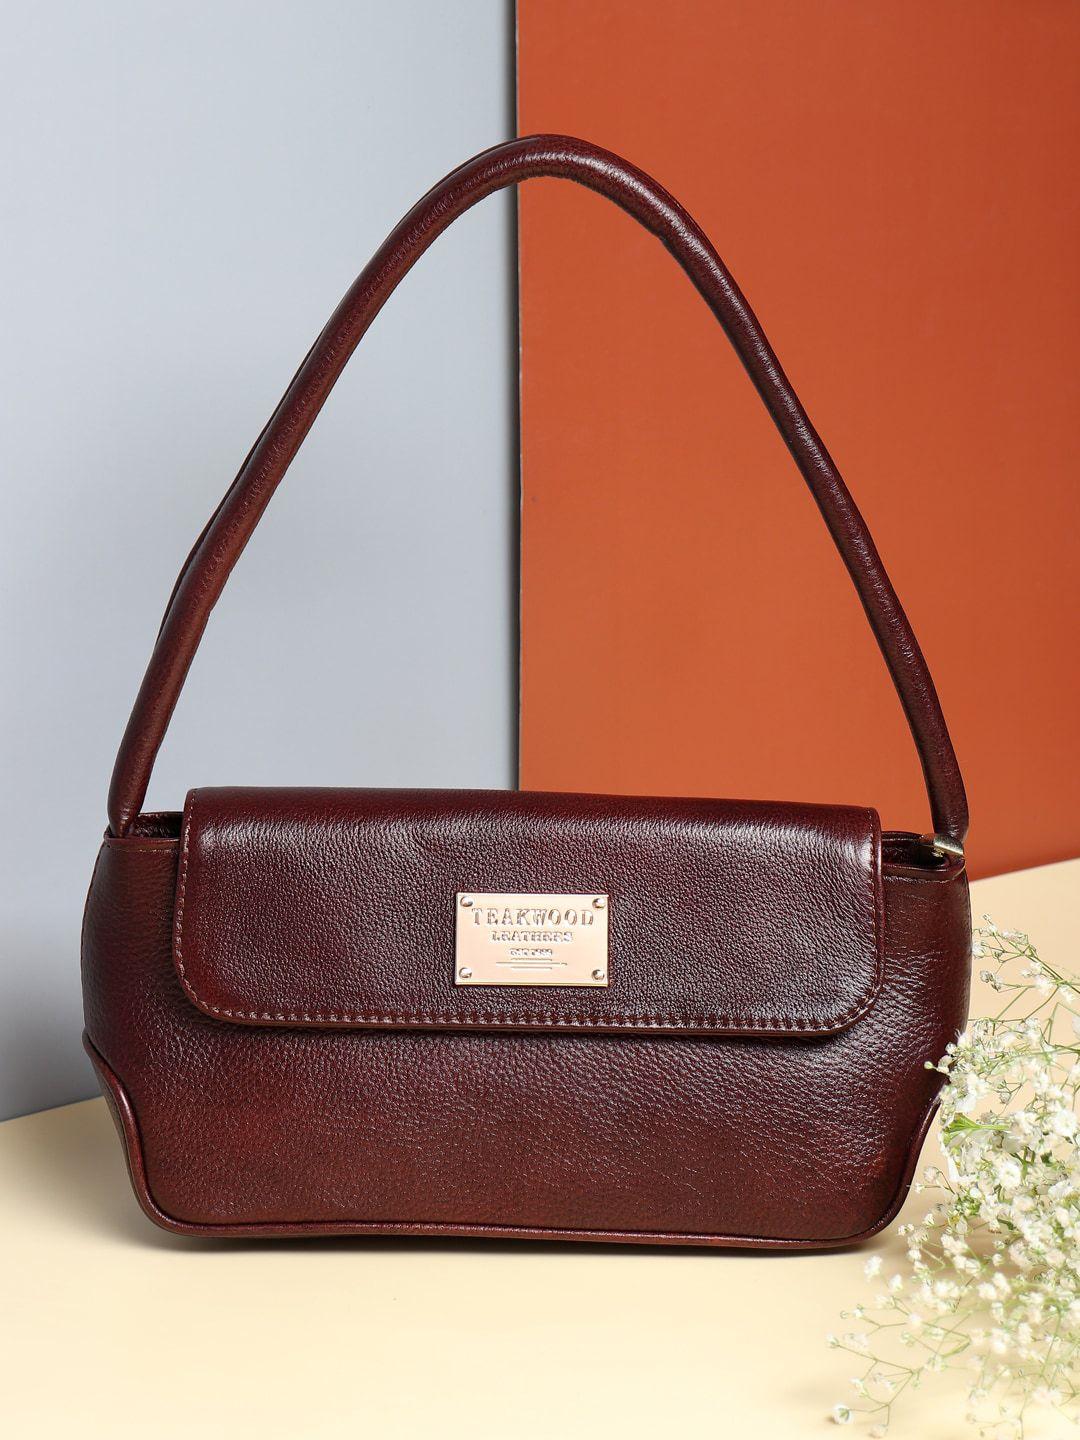 teakwood leathers maroon leather structured handheld bag